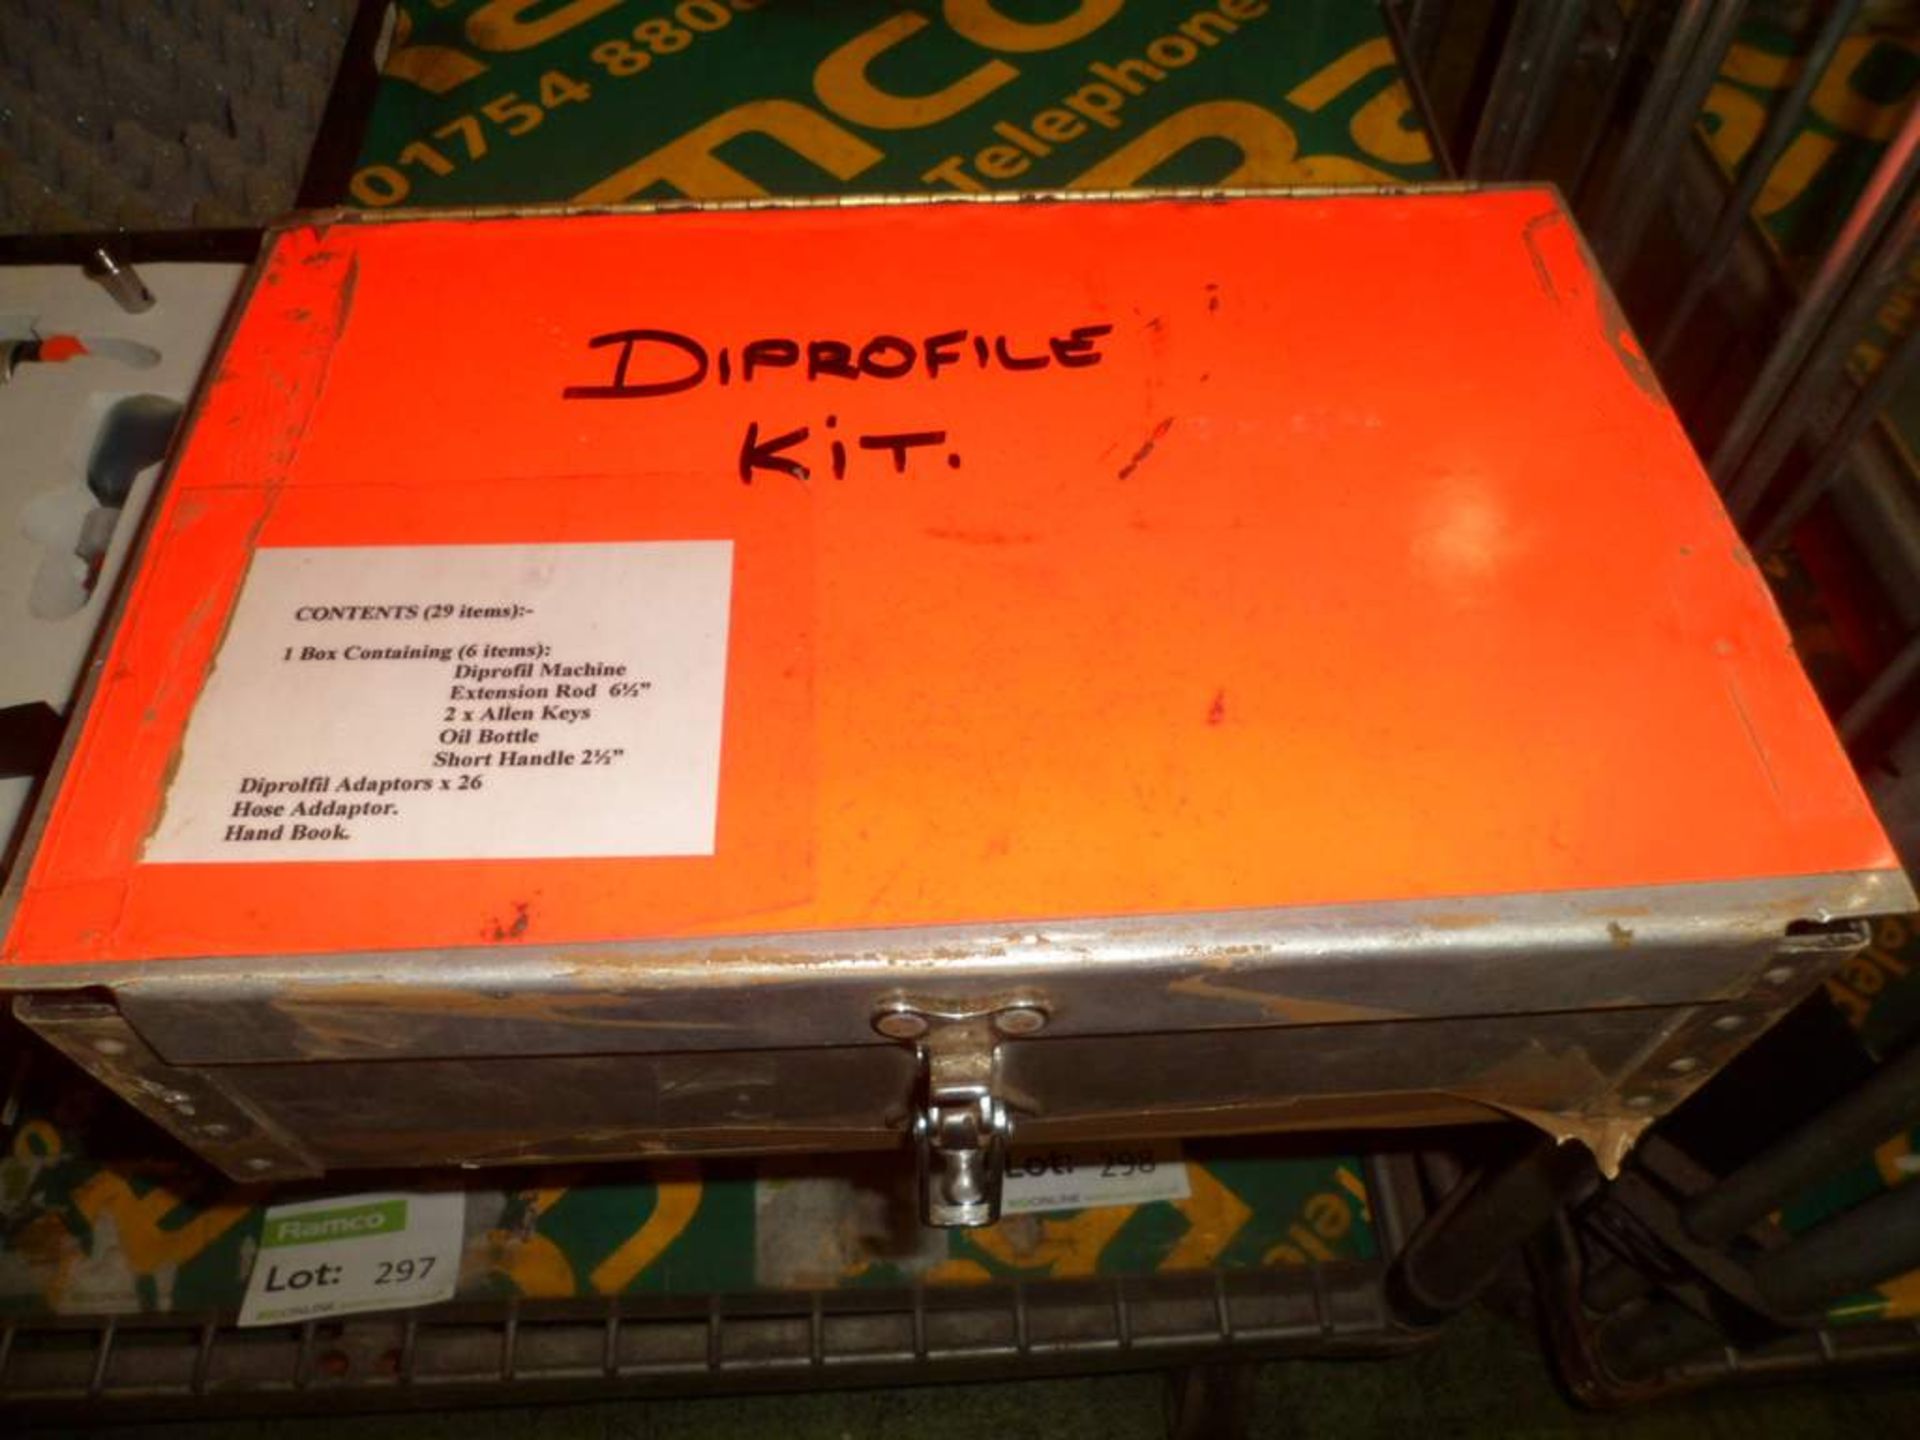 Diprofil - UTD lap and filing machine and accessories